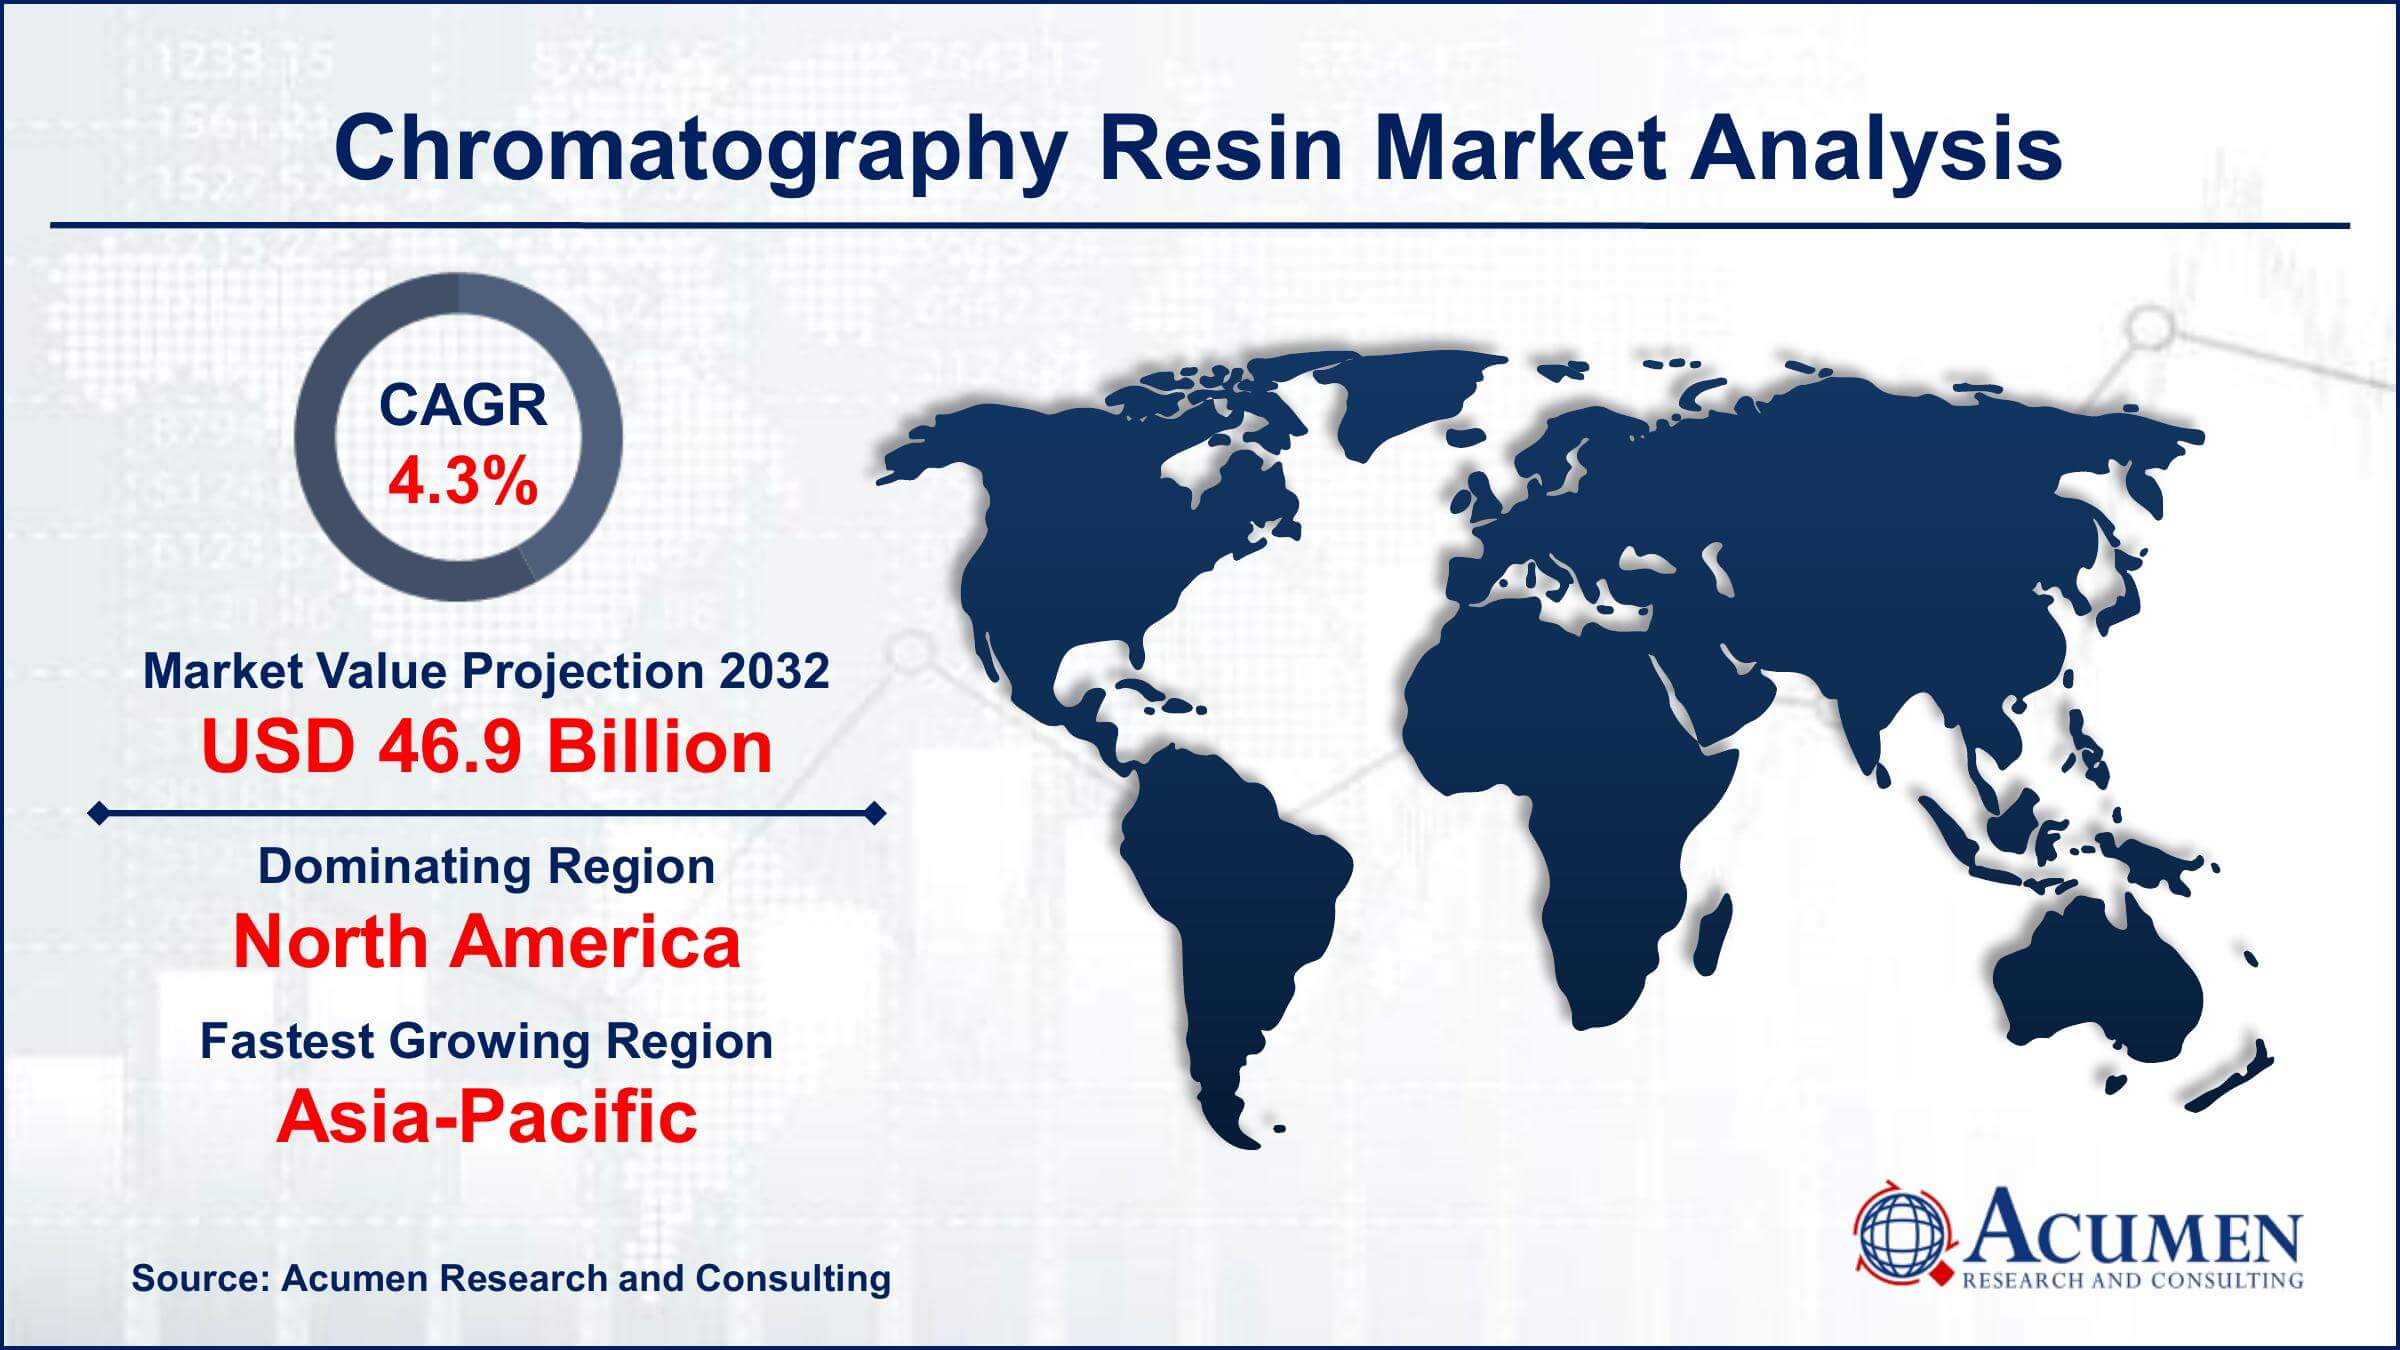 Global Chromatography Resin Market Trends